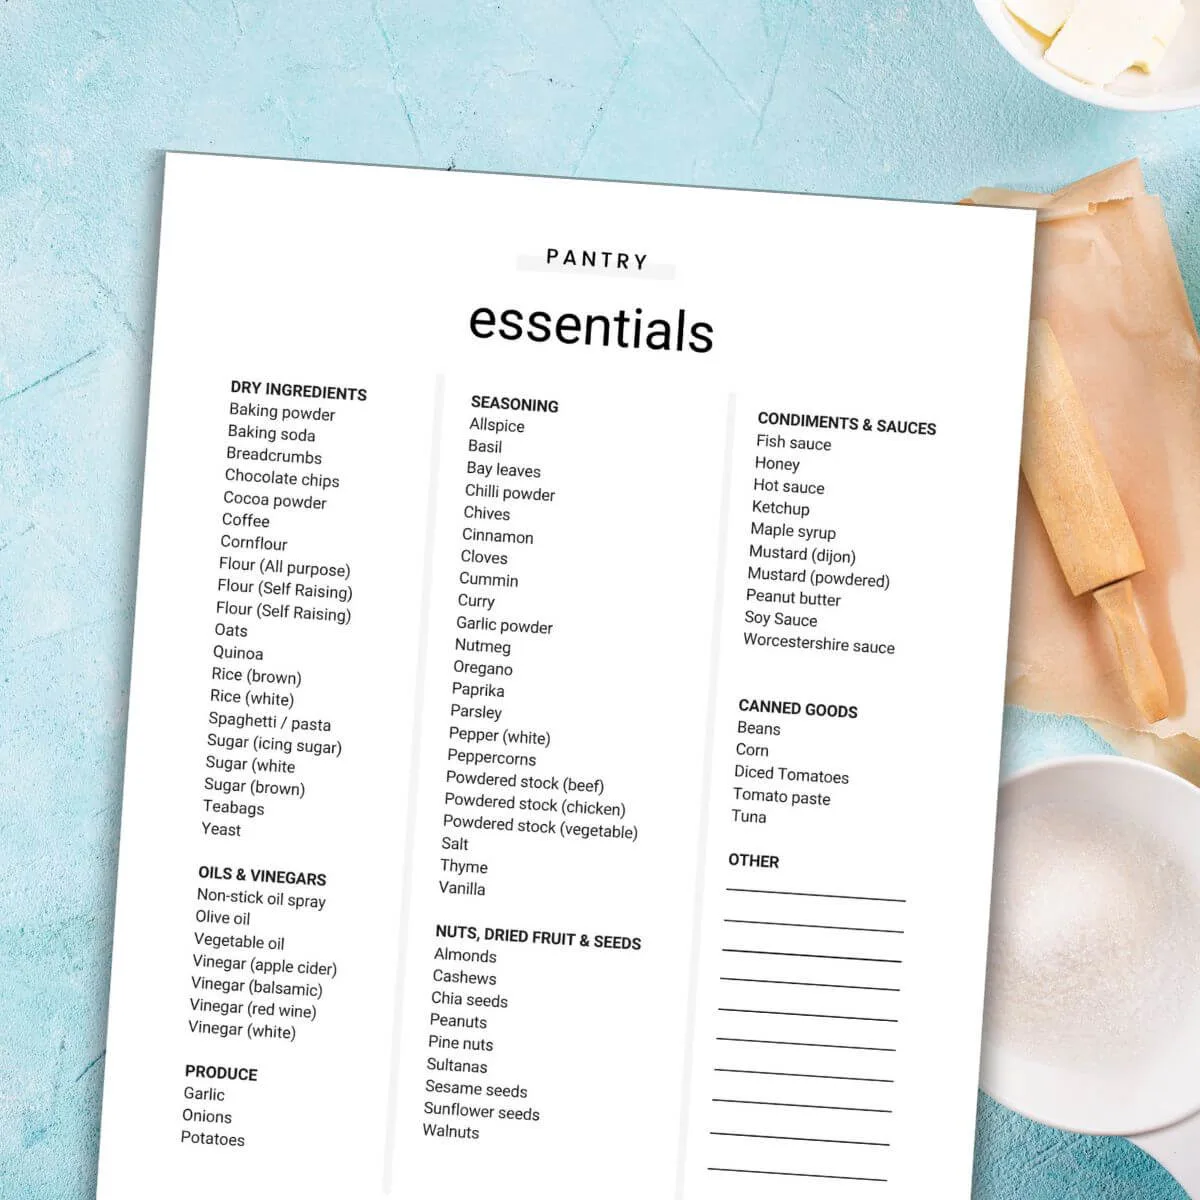 Printable pantry essentials inventory list.